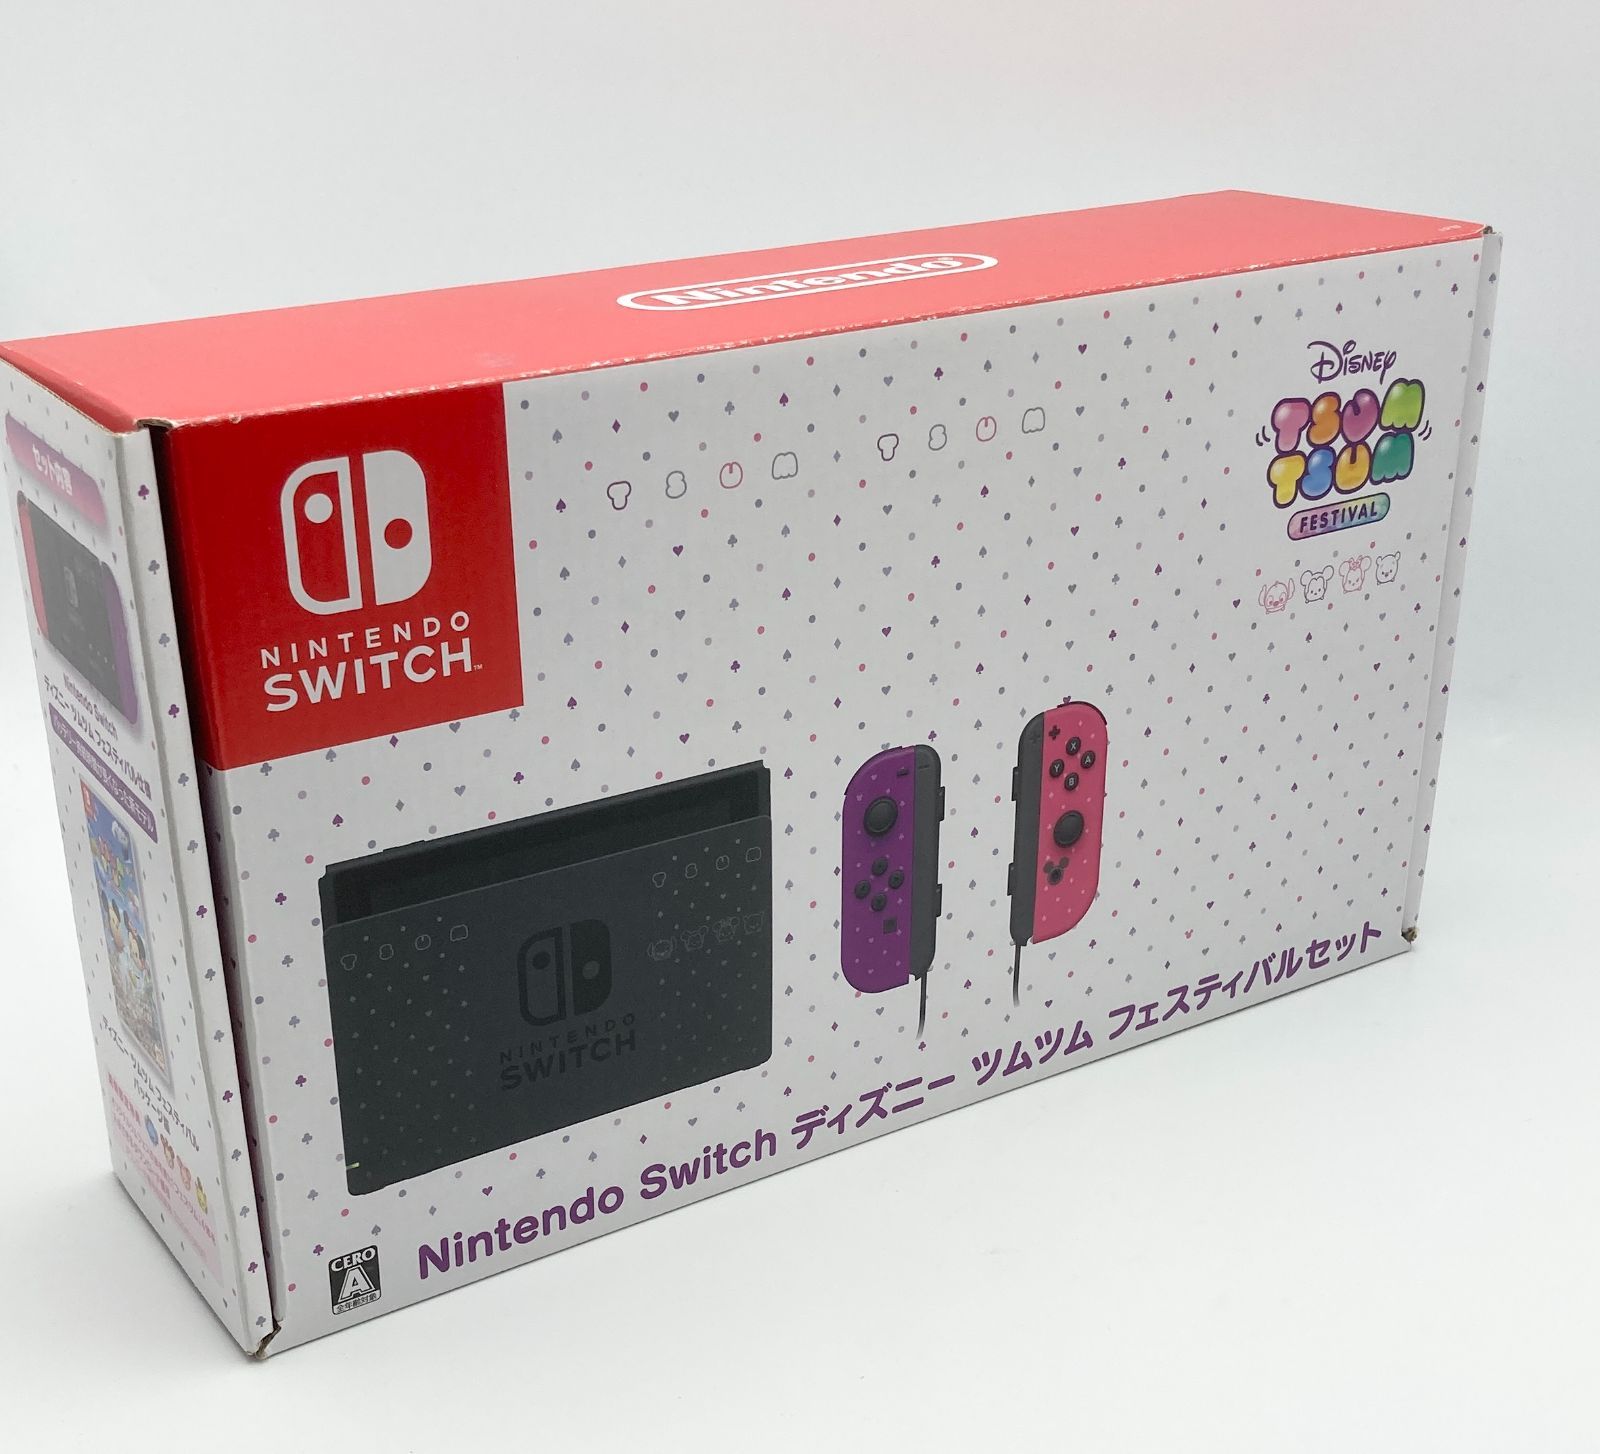 Nintendo Switch ディズニー ツムツム フェスティバルセット - メルカリ